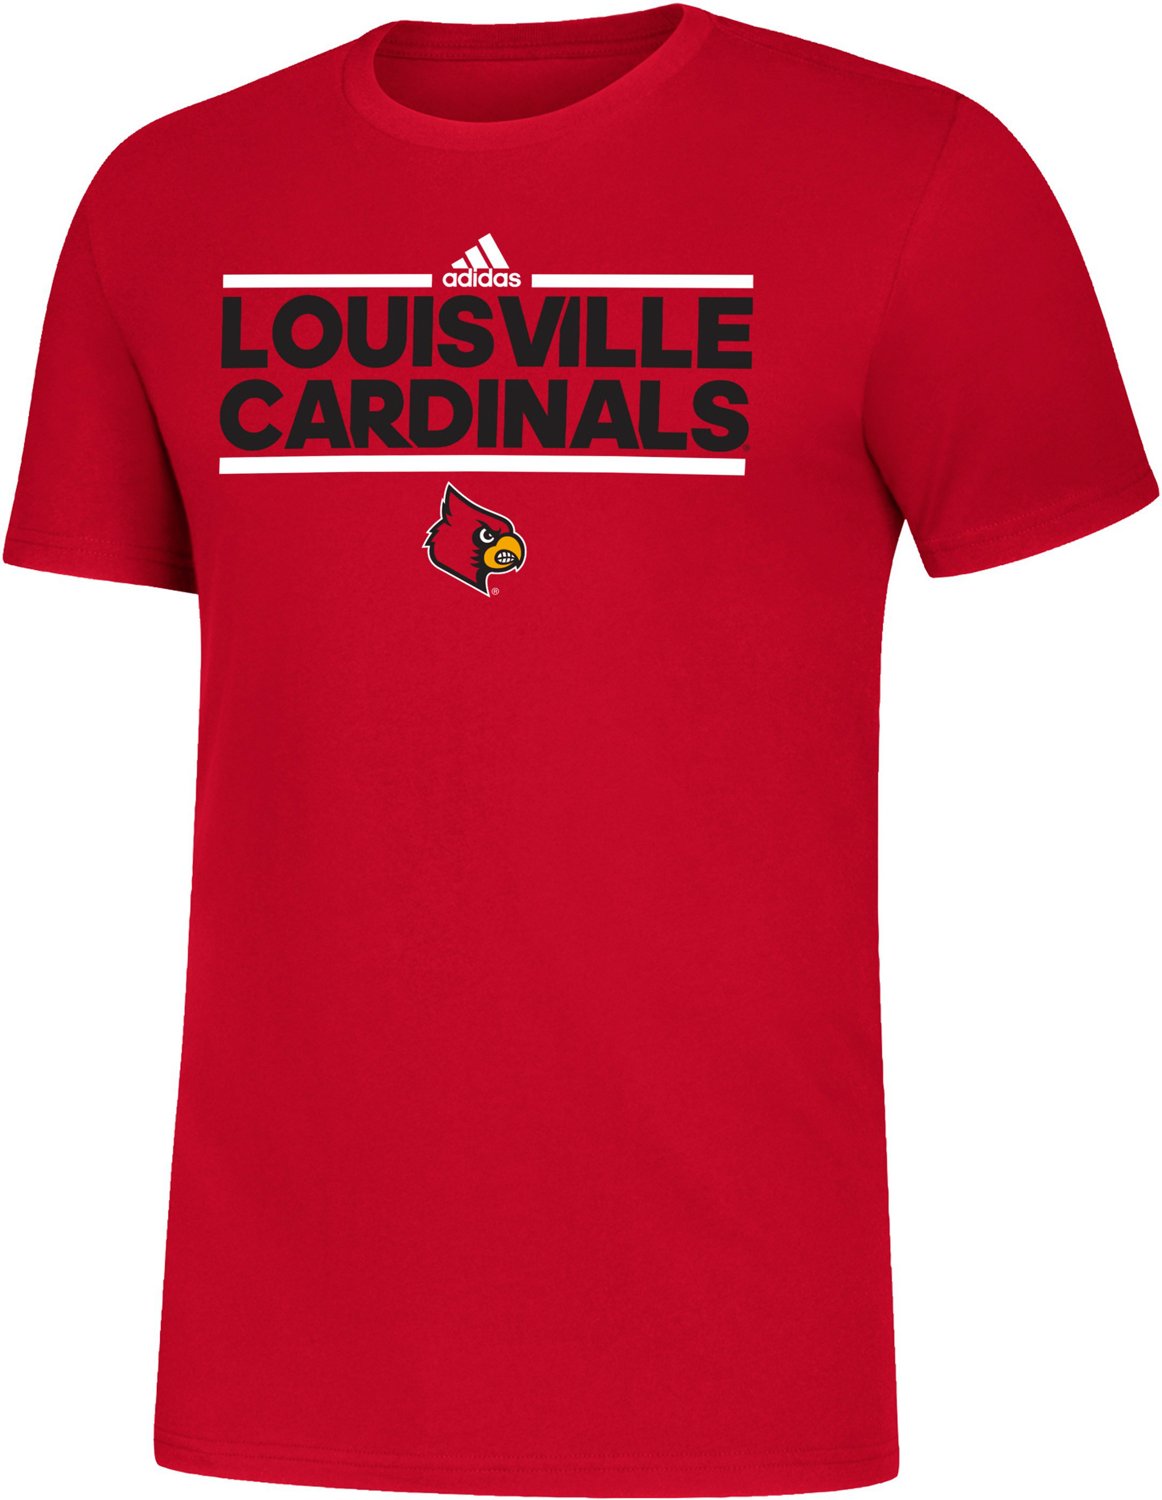 1. University of Louisville Men's Shirt